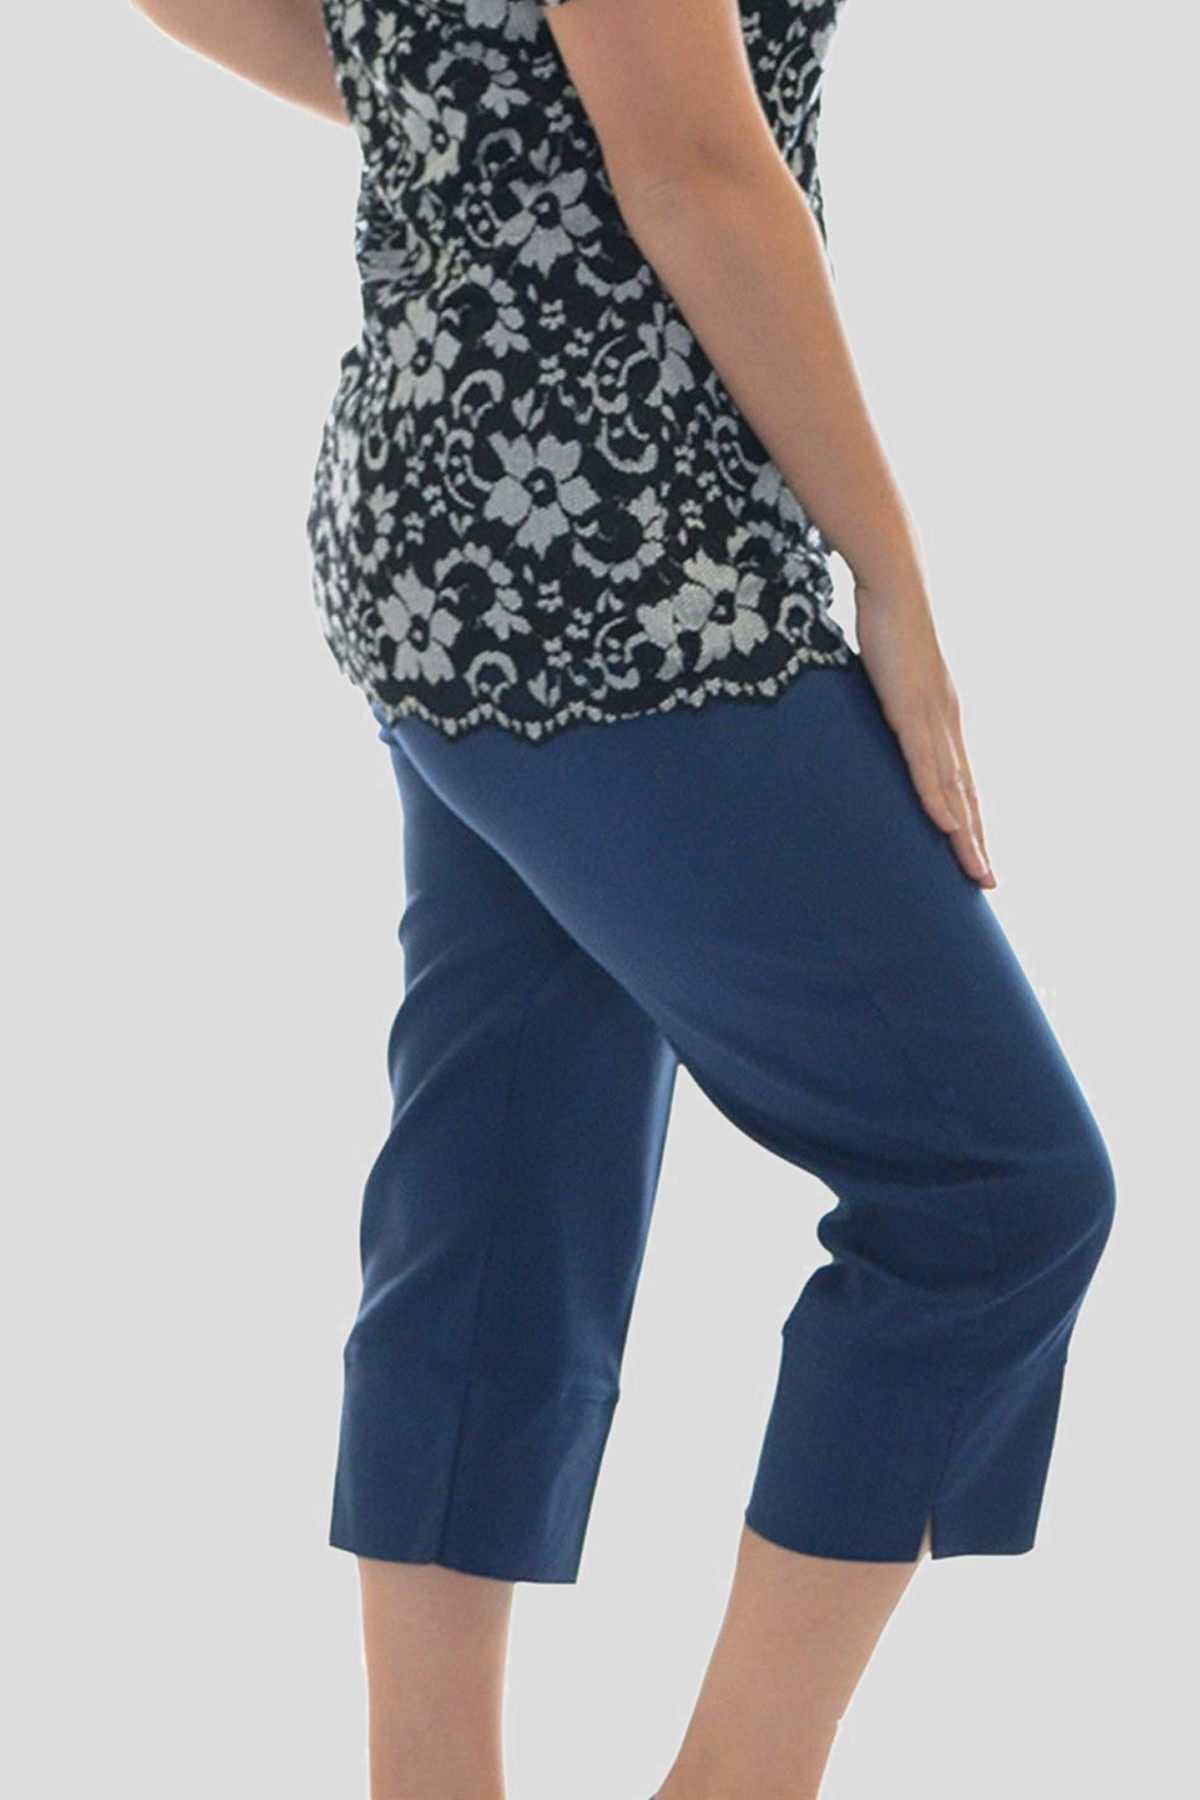 Ladies Plus Size 3/4 Length Cropped Elasticated Stretchy Capri Pants Shorts 